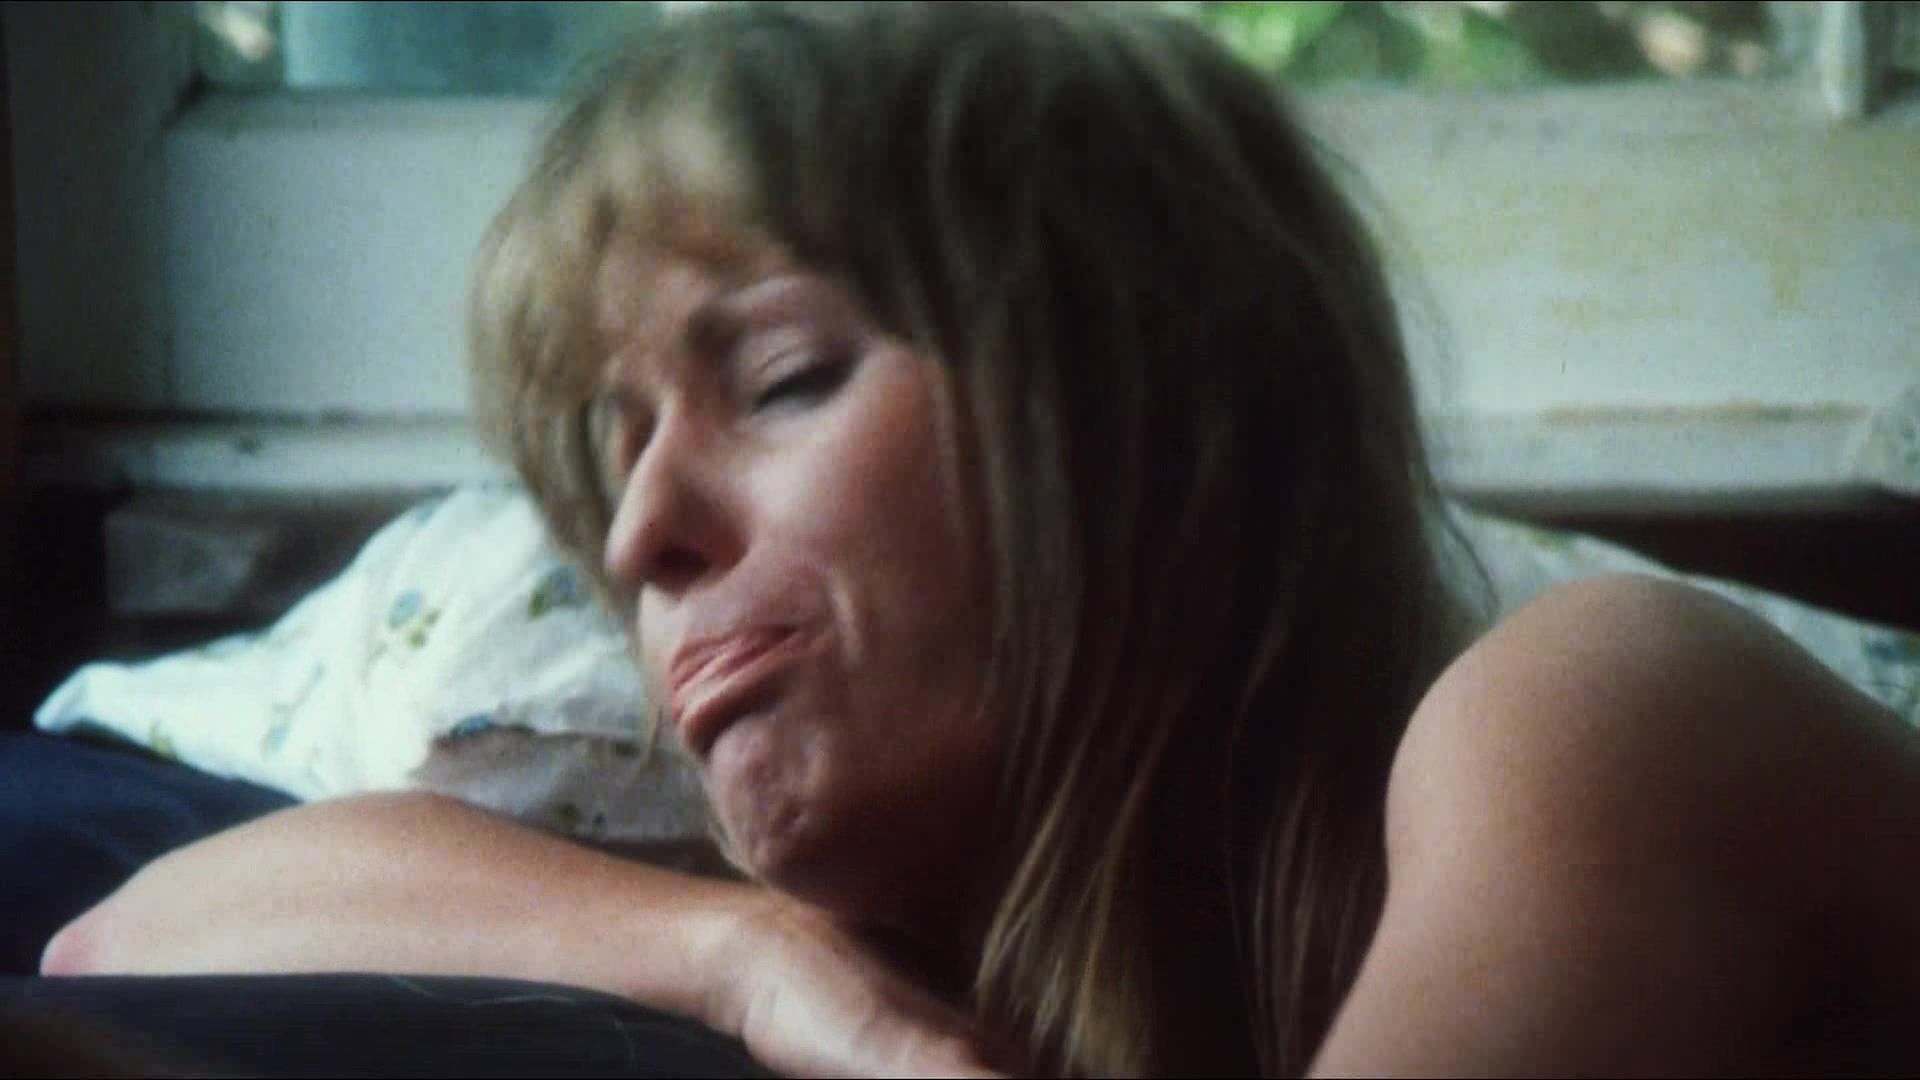 CzechPorn Classic Erotic Film "Stone" (1974) 2afg